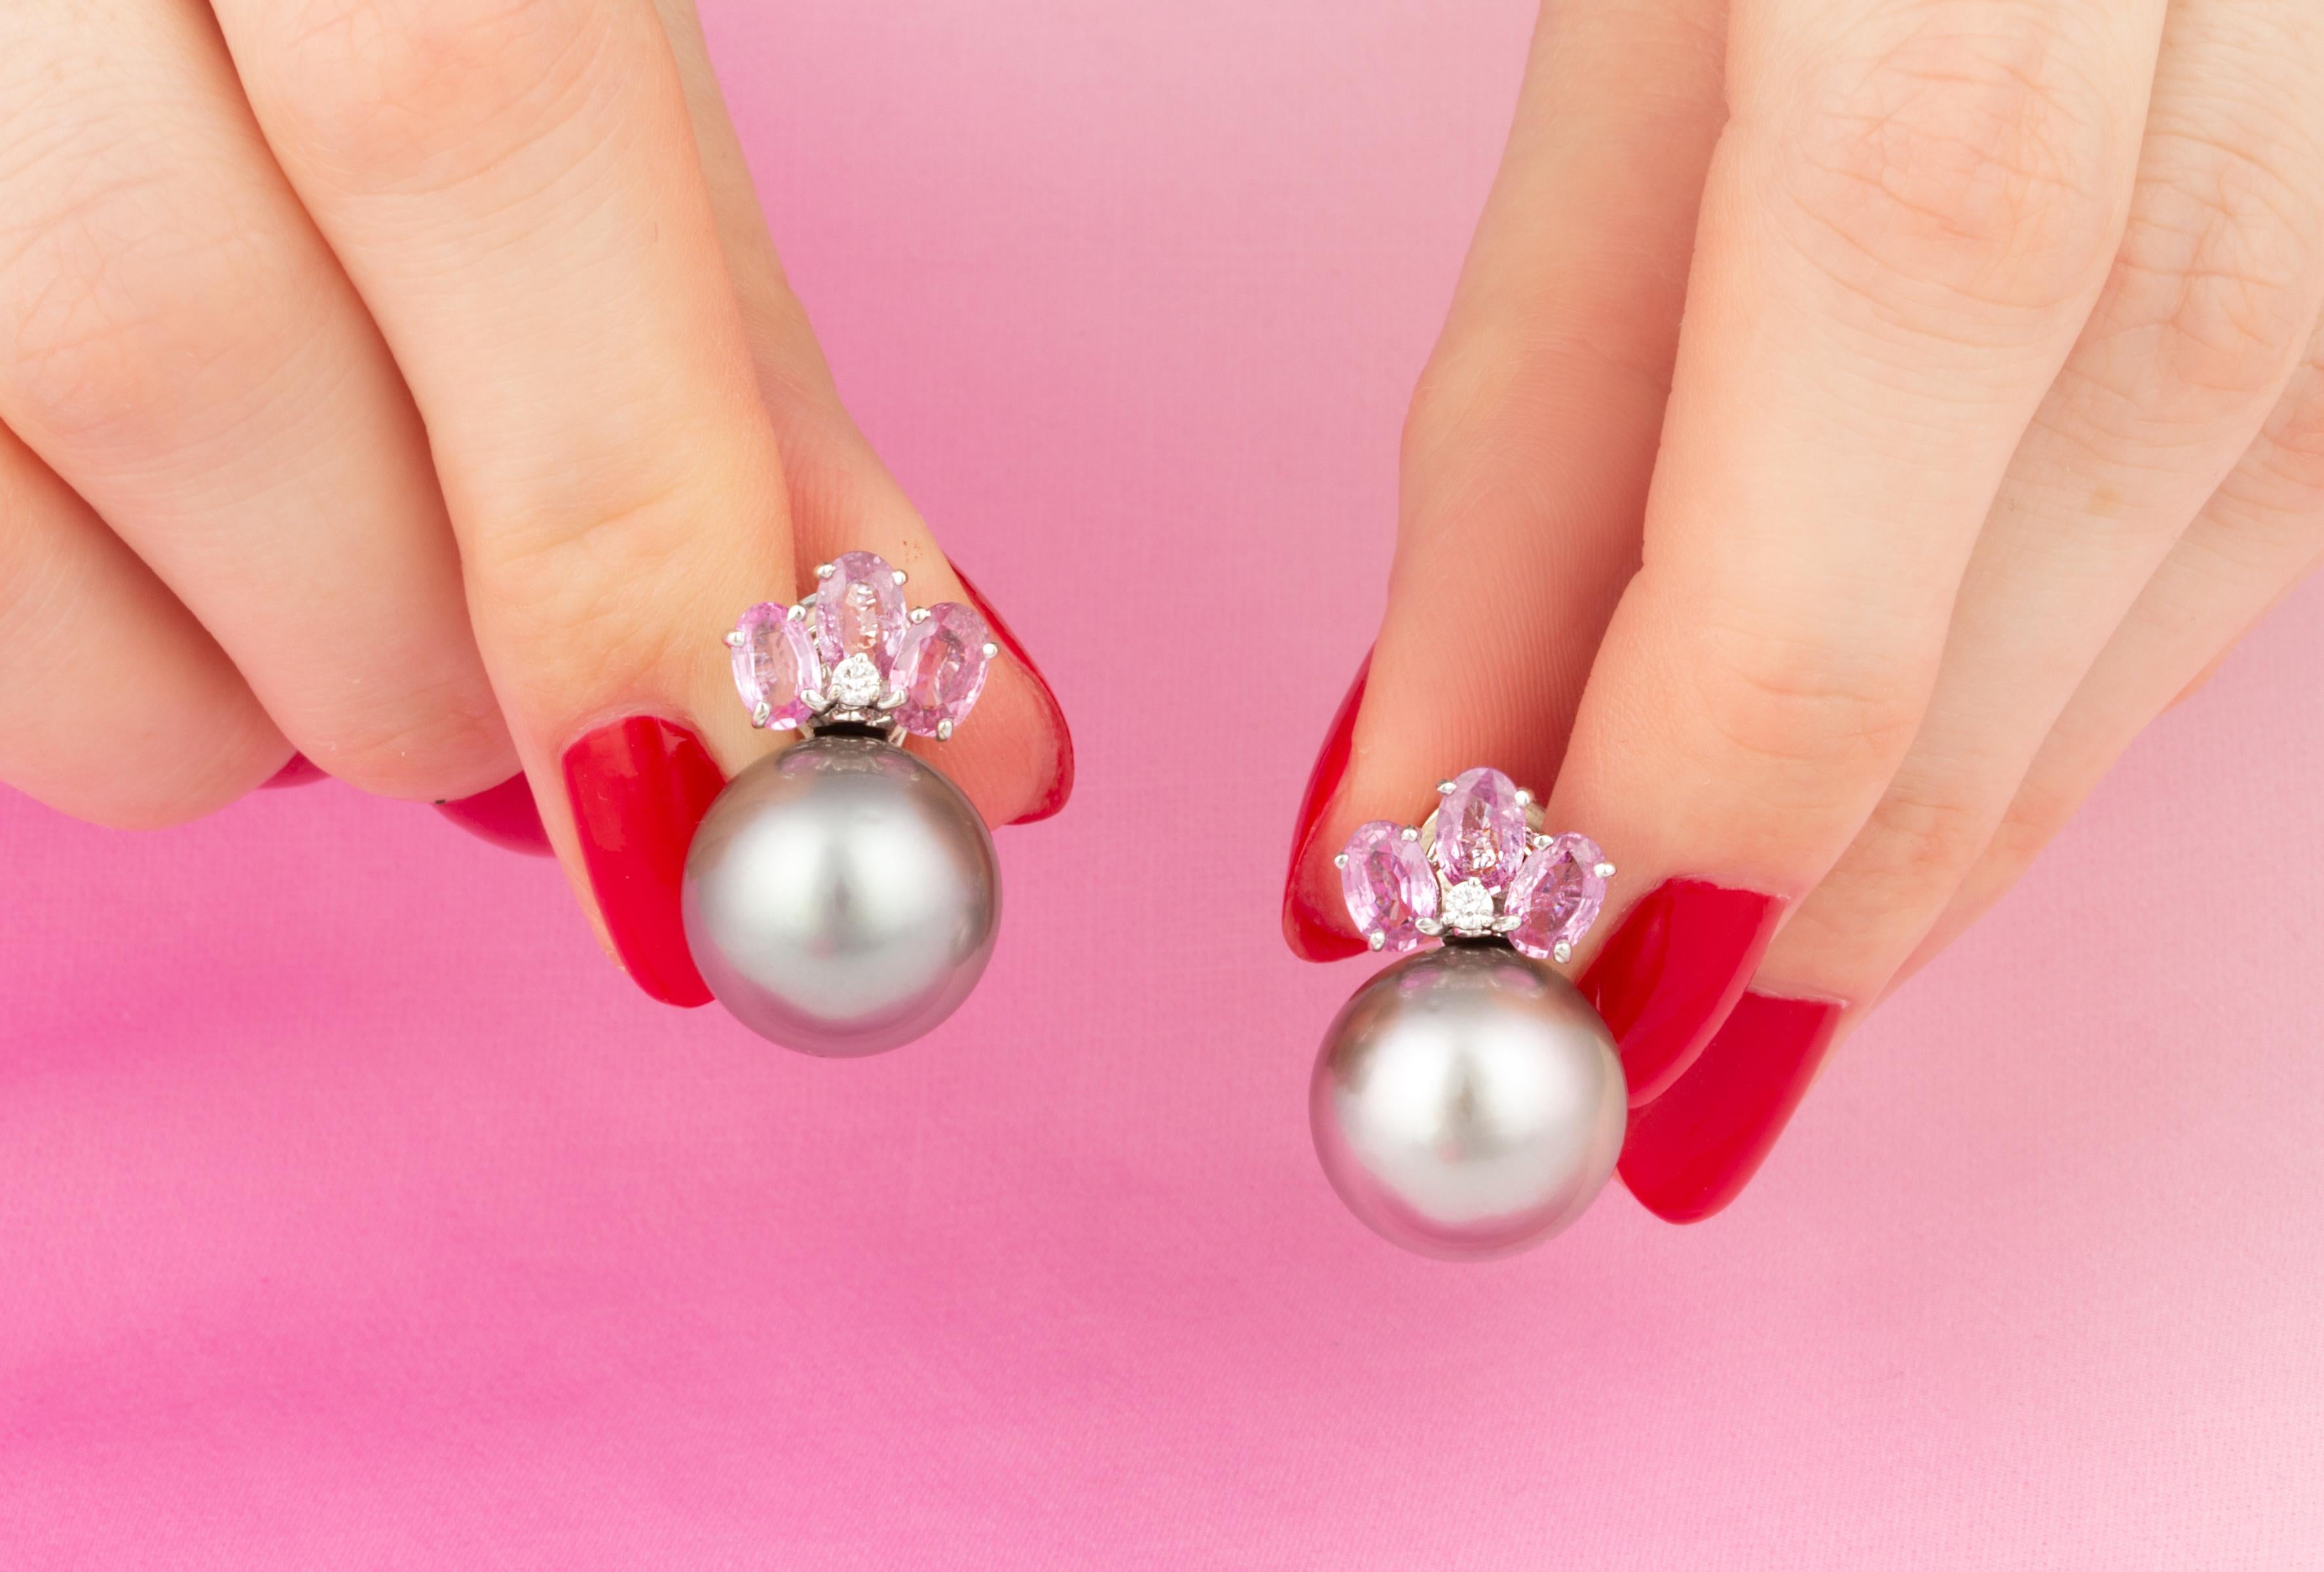 pearl and sapphire stud earrings